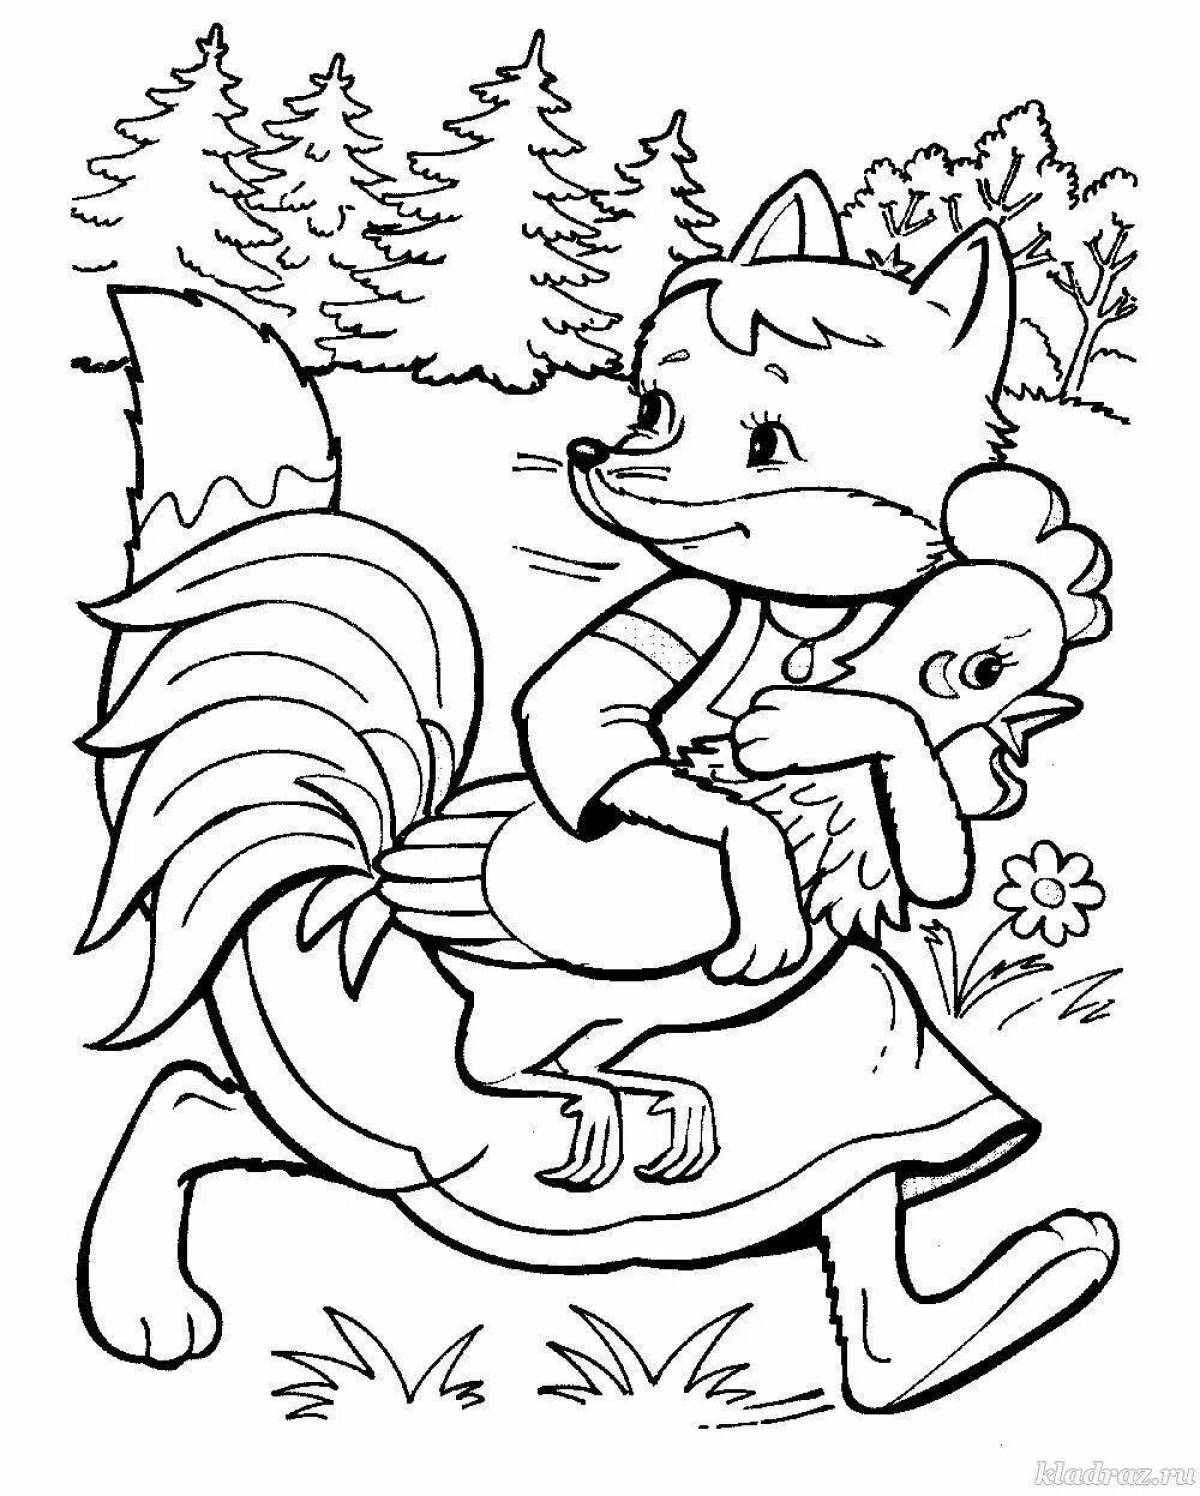 Glorious fox coloring